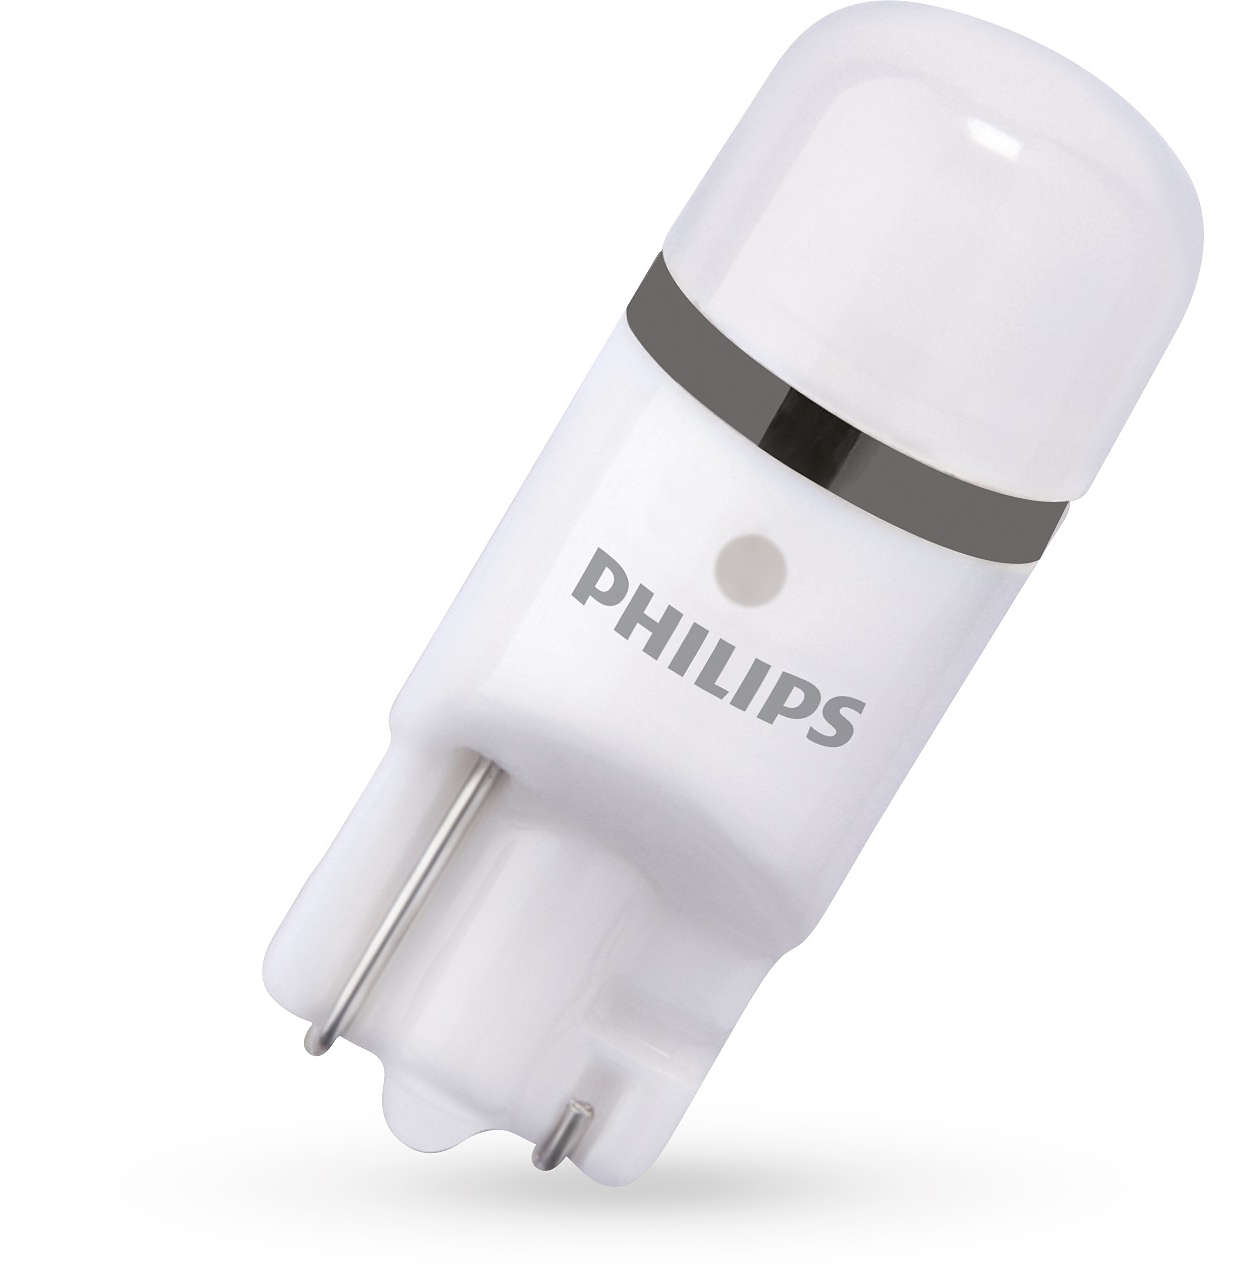 Филипс диодные. Philips w5w 6000k led. Лампа Филипс w5w светодиодная. Philips t10 w5w. Led лампы Филипс w5w.